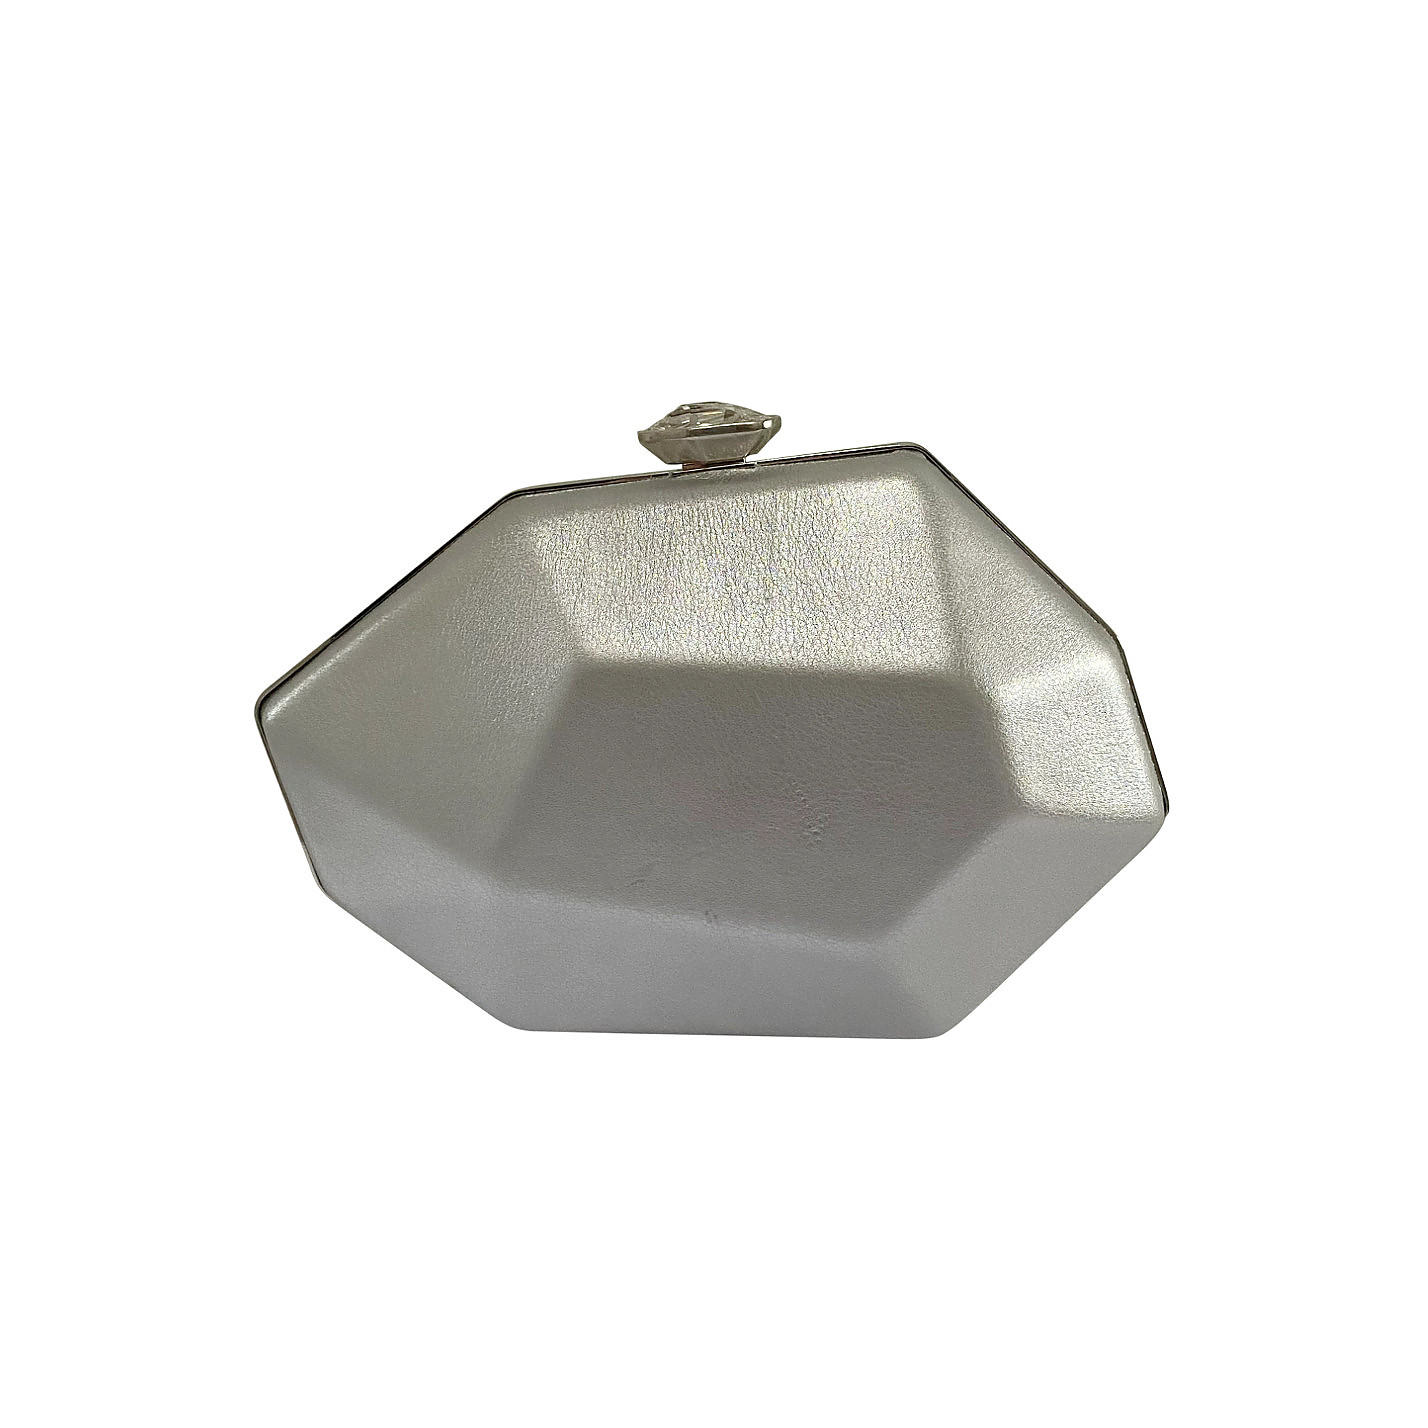 Atelier Swarovski Light green crystal geometric clutch with silver leather contrast